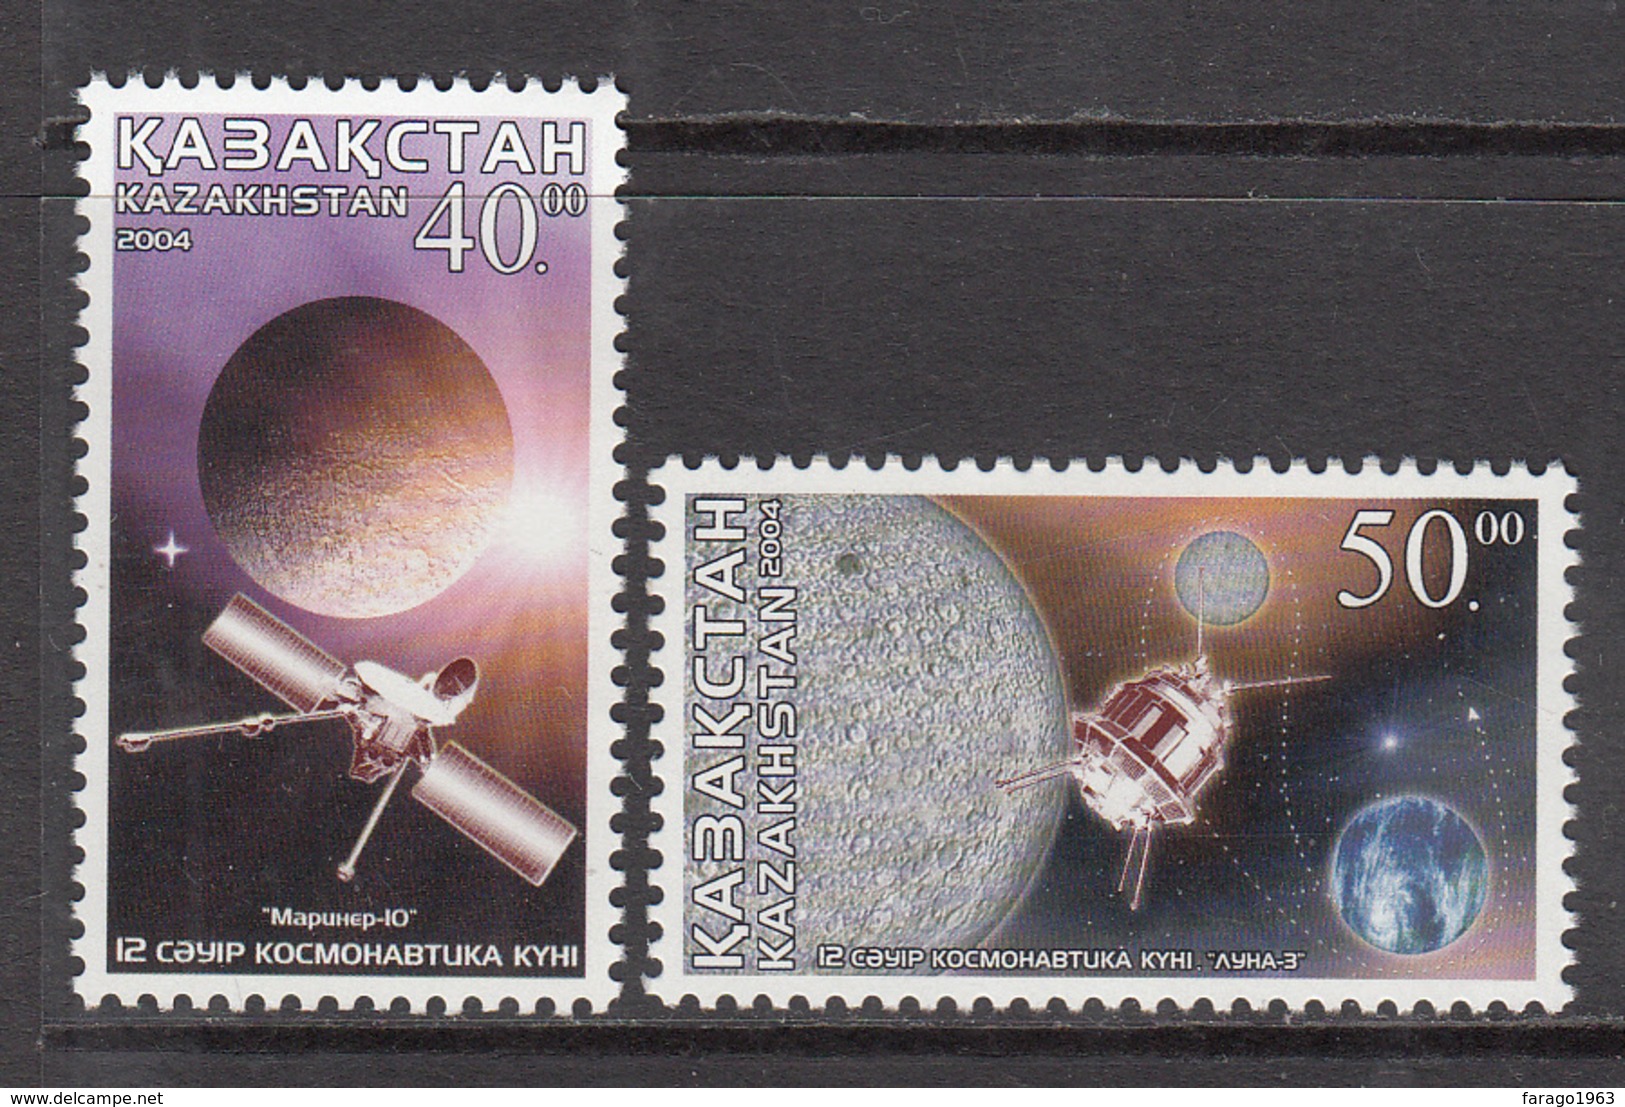 2004 Kazakhstan Space Cosmonauts Day Complete Set Of 2  Stamps   MNH - Kazajstán